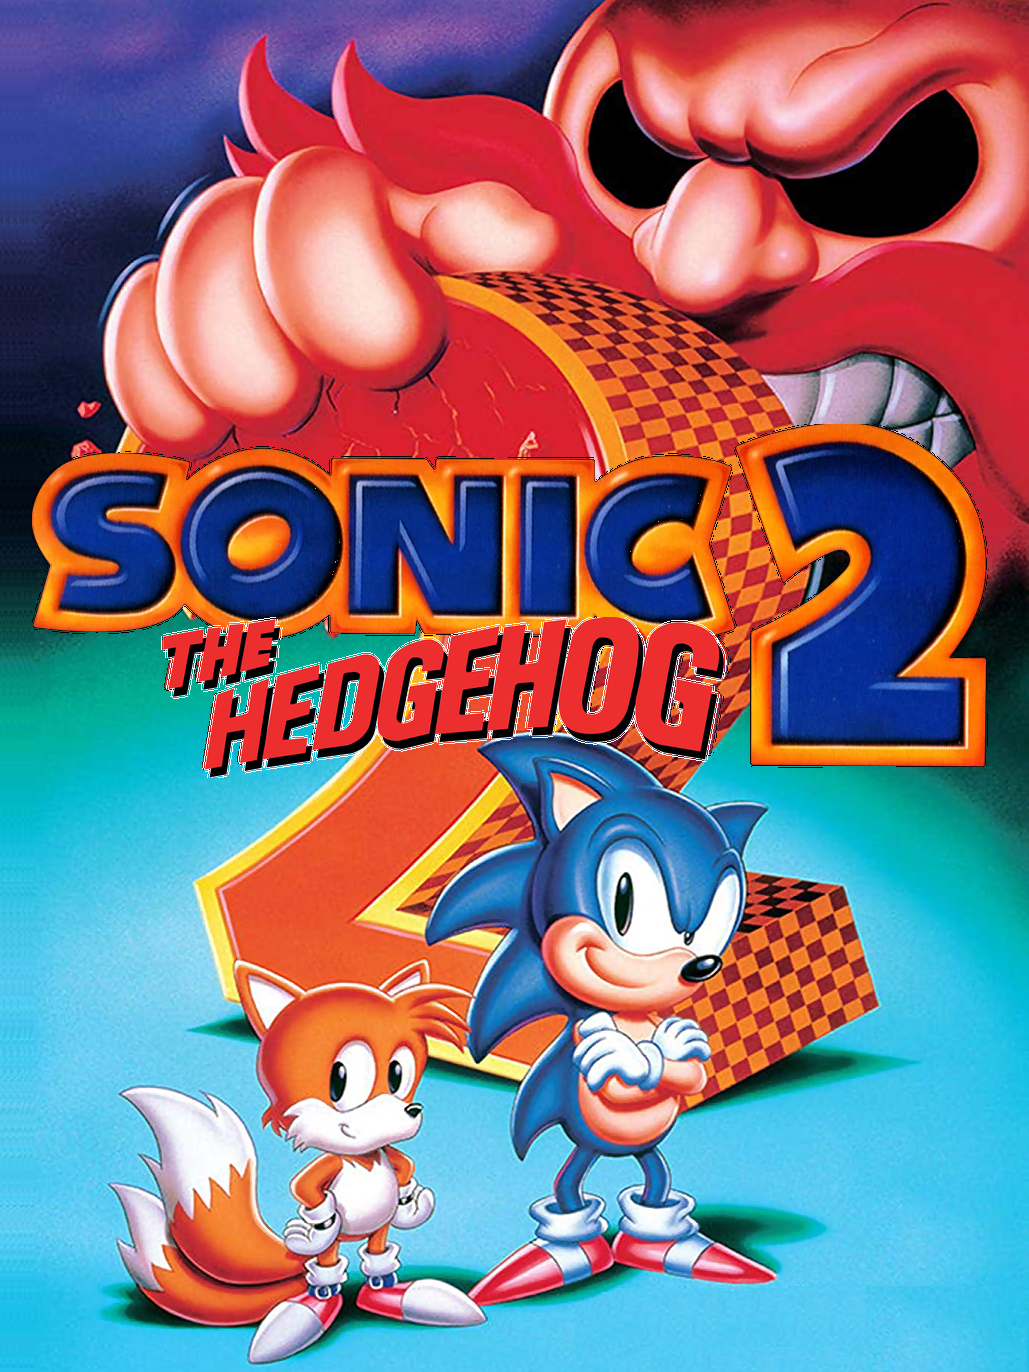 Sonic the Hedgehog 2 | VG247